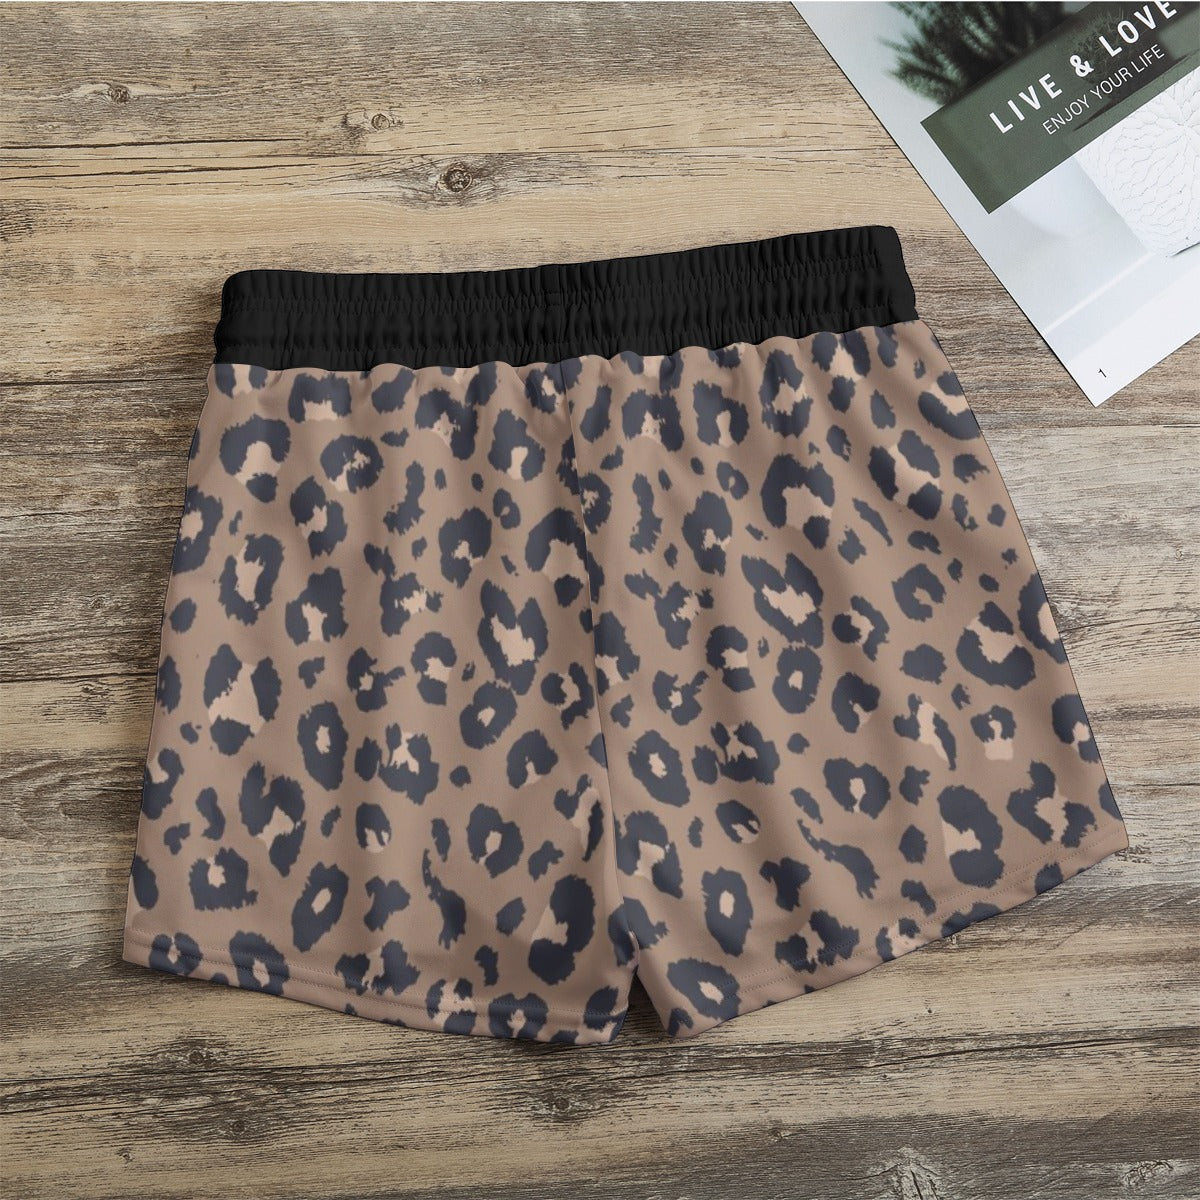 Vintage Leopard Casual Shorts